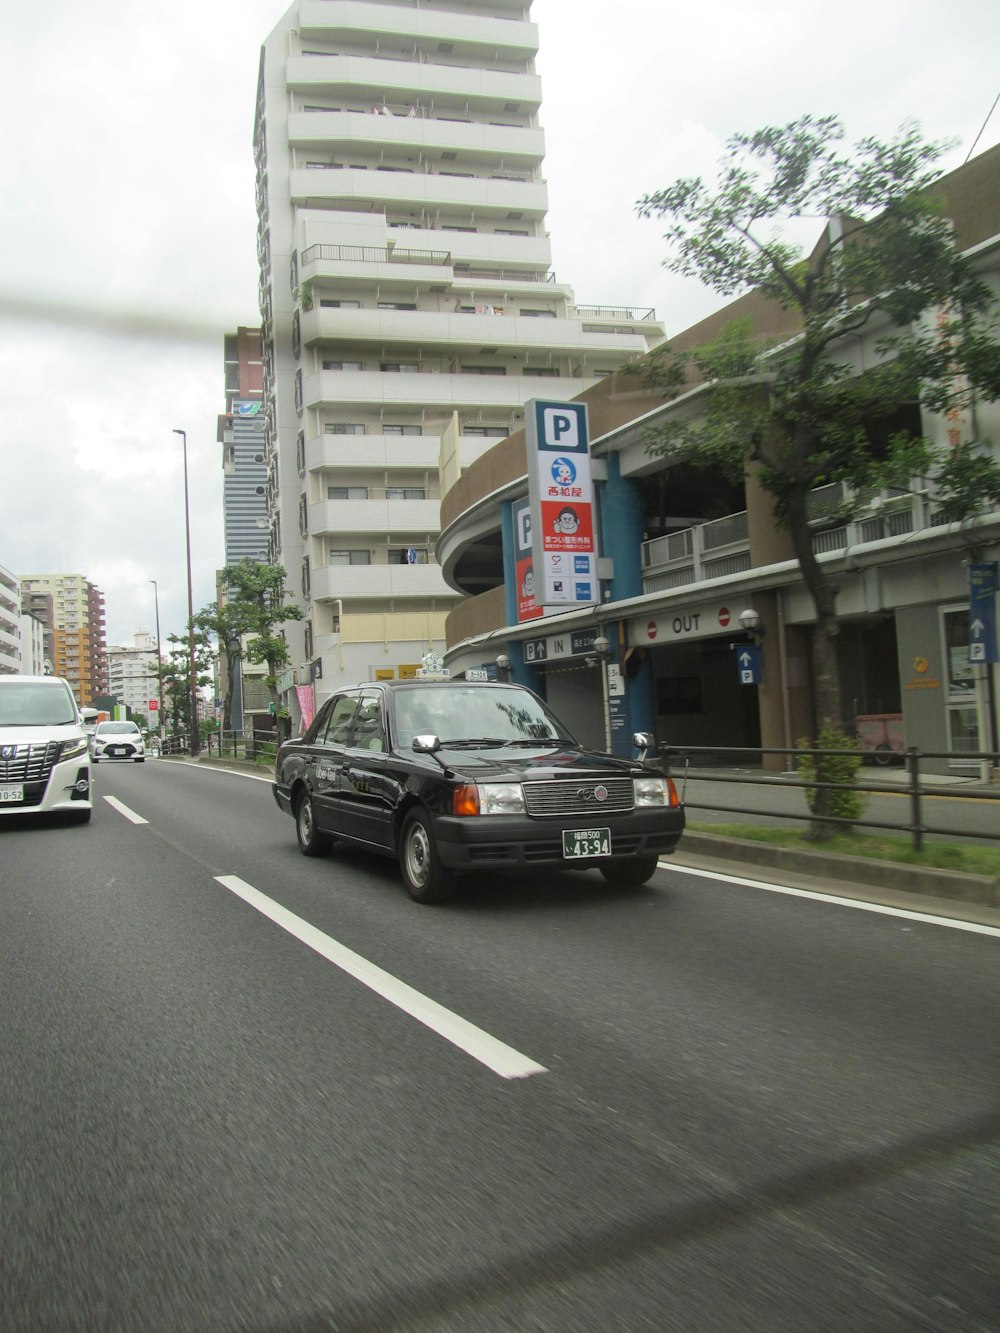 a black car driving down a street next to tall buildings